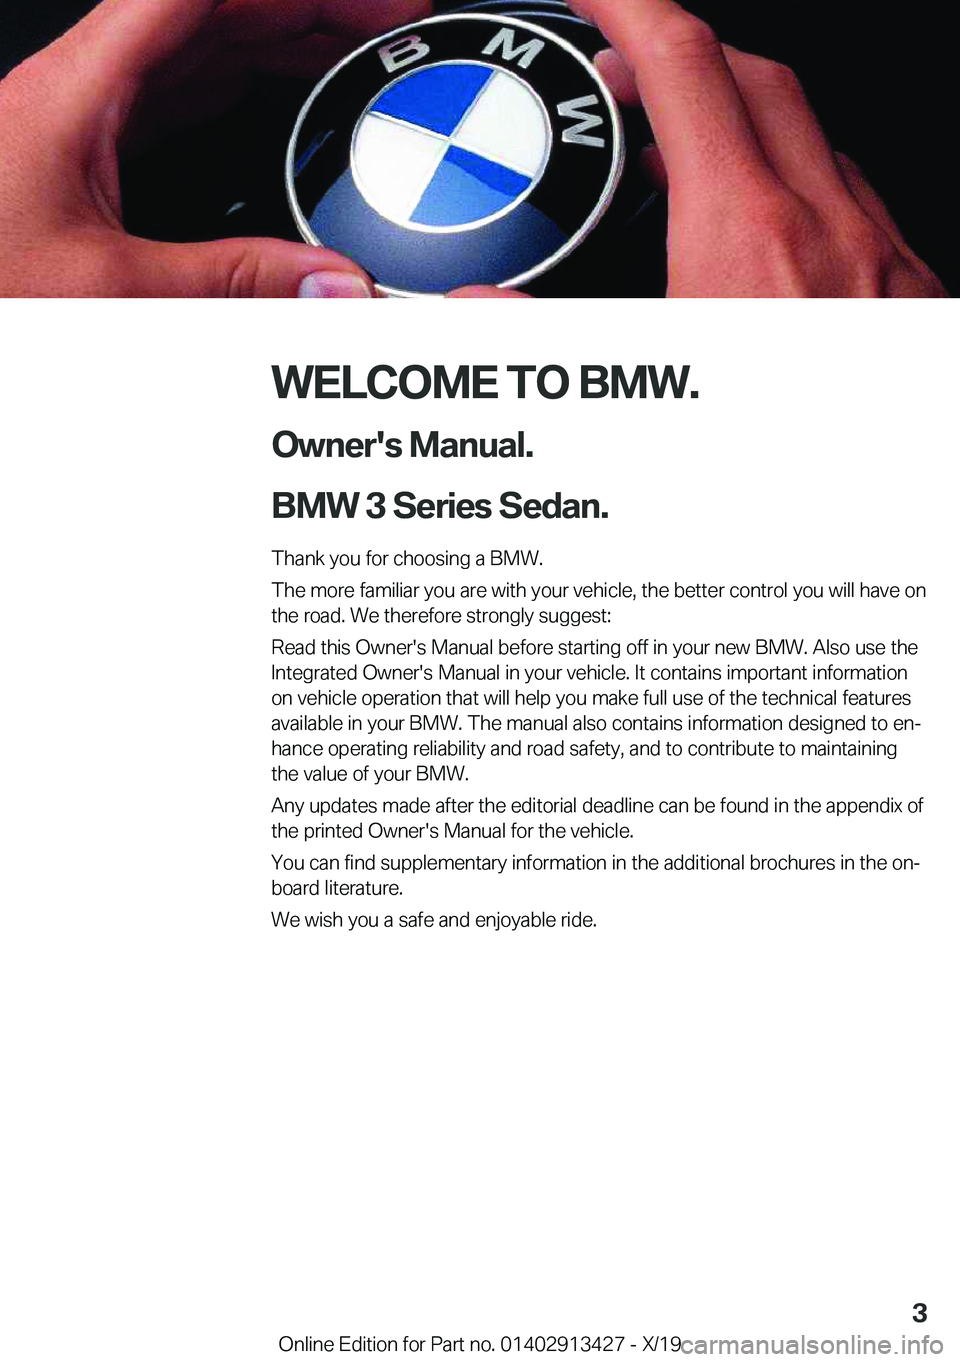 BMW 3 SERIES 2020  Owners Manual �W�E�L�C�O�M�E��T�O��B�M�W�.�O�w�n�e�r�'�s��M�a�n�u�a�l�.
�B�M�W��3��S�e�r�i�e�s��S�e�d�a�n�.
�T�h�a�n�k��y�o�u��f�o�r��c�h�o�o�s�i�n�g��a��B�M�W�.
�T�h�e��m�o�r�e��f�a�m�i�l�i�a�r��